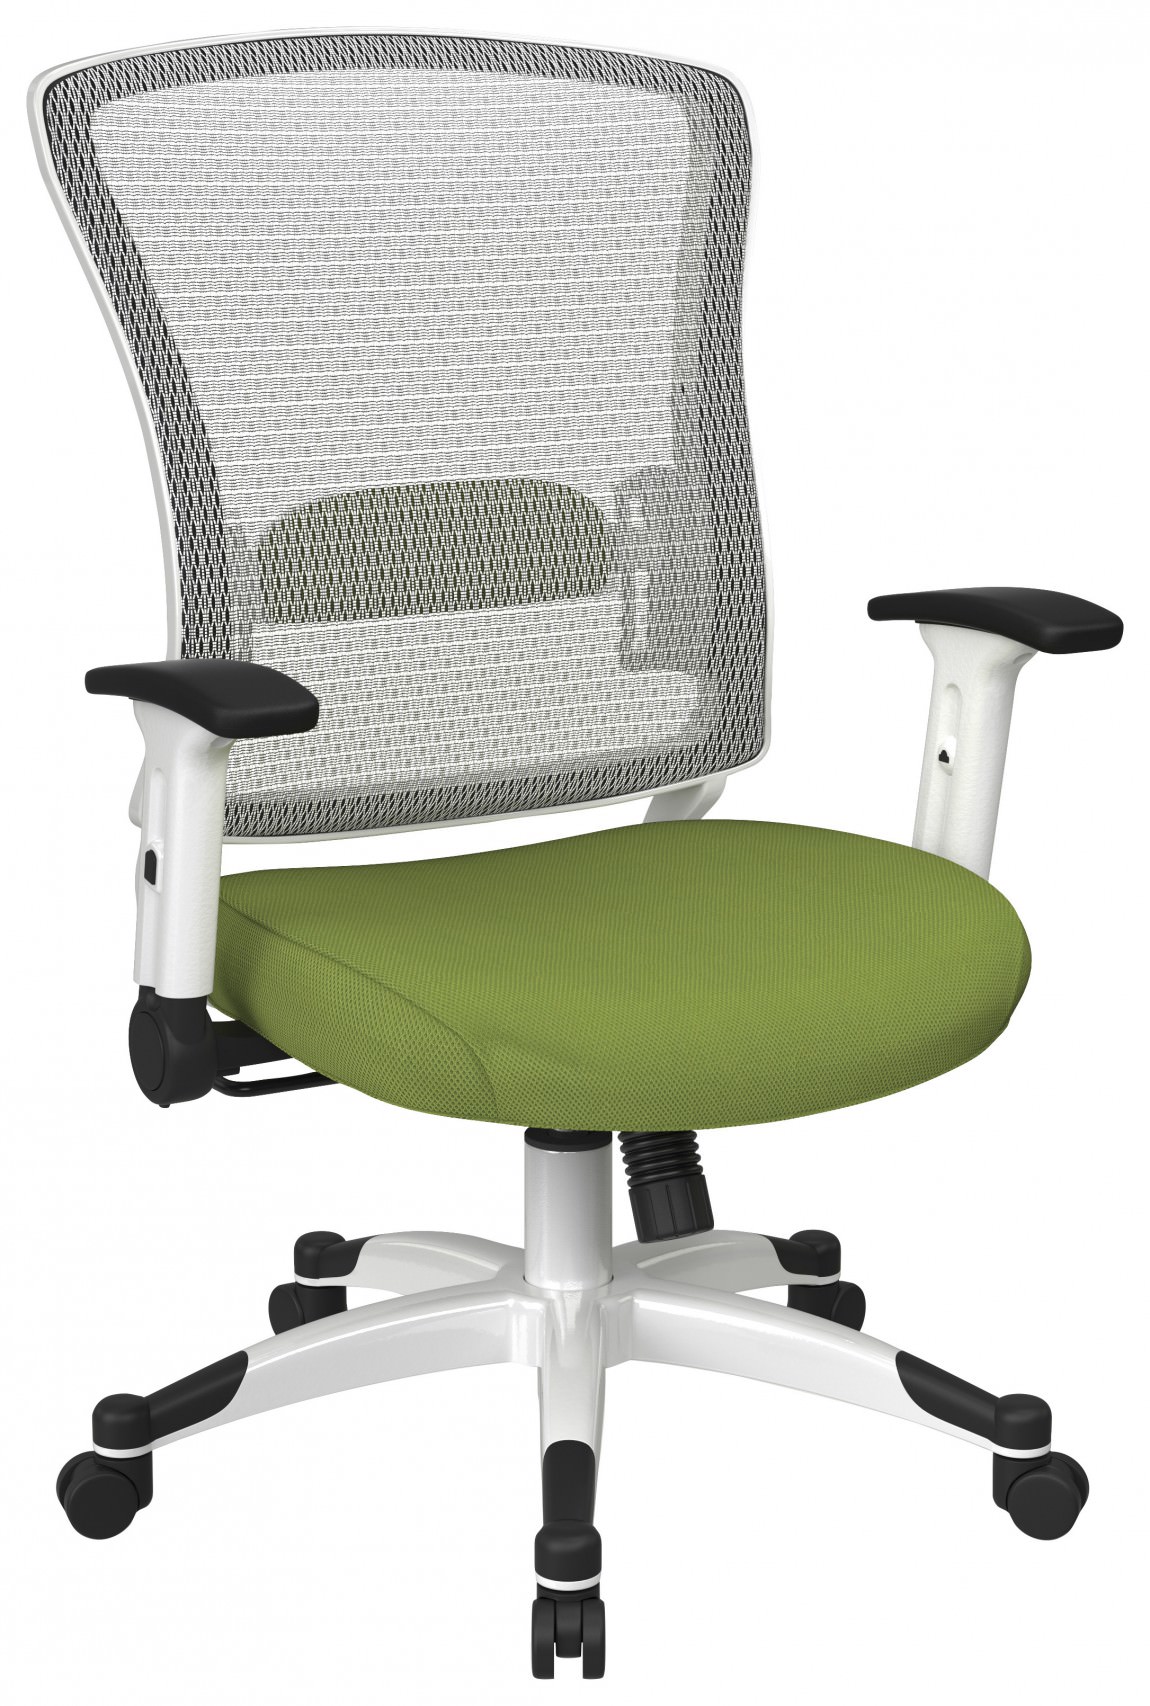 https://madisonliquidators.com/images/p/1150/25237-mesh-back-office-chair-1.jpg